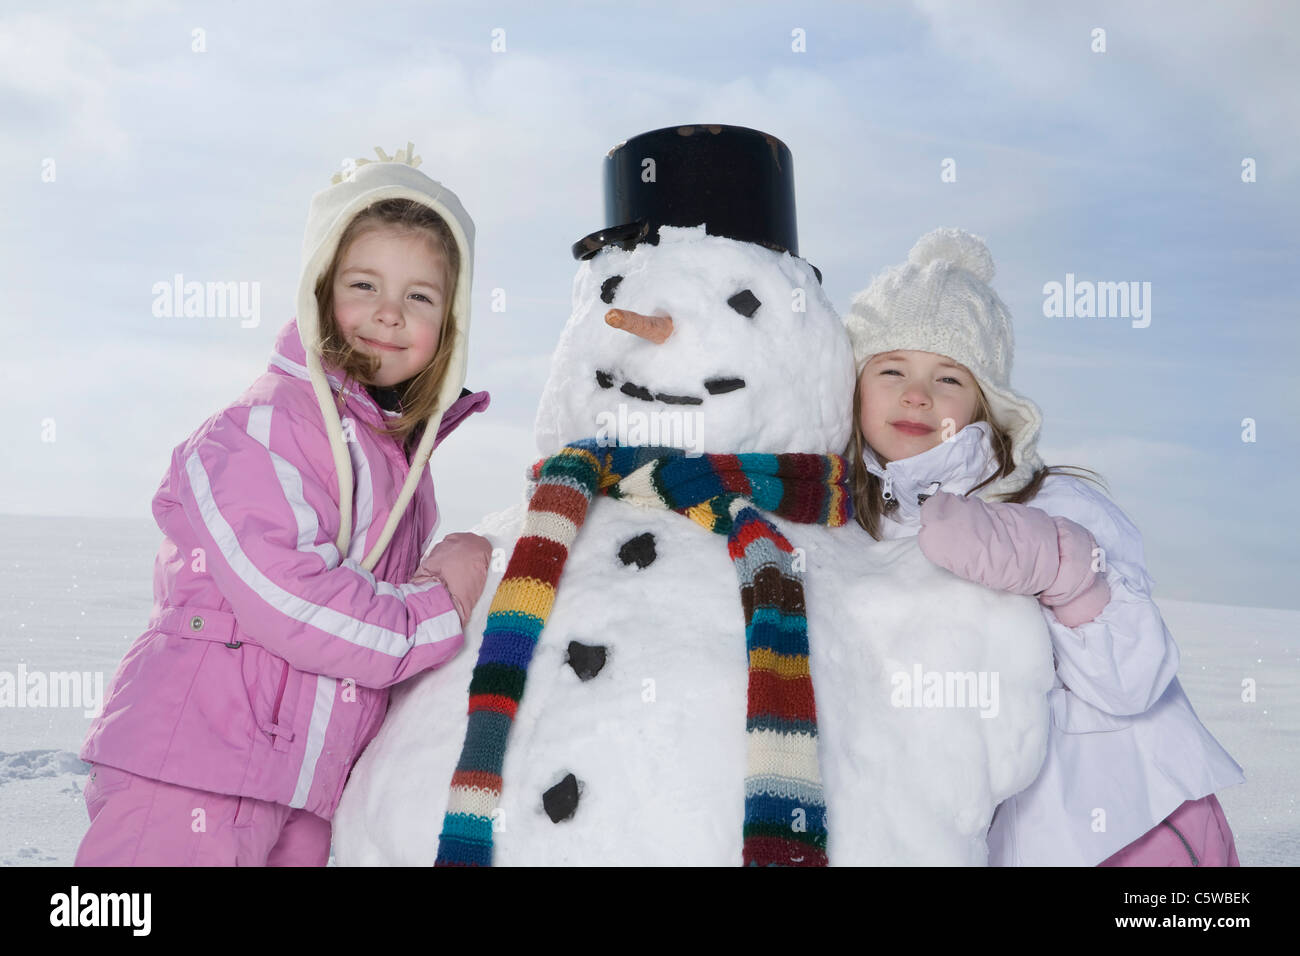 Germany, Bavaria, Munich, Two girls (4-5) (8-9) standing next to  snowman, smiling, portrait Stock Photo